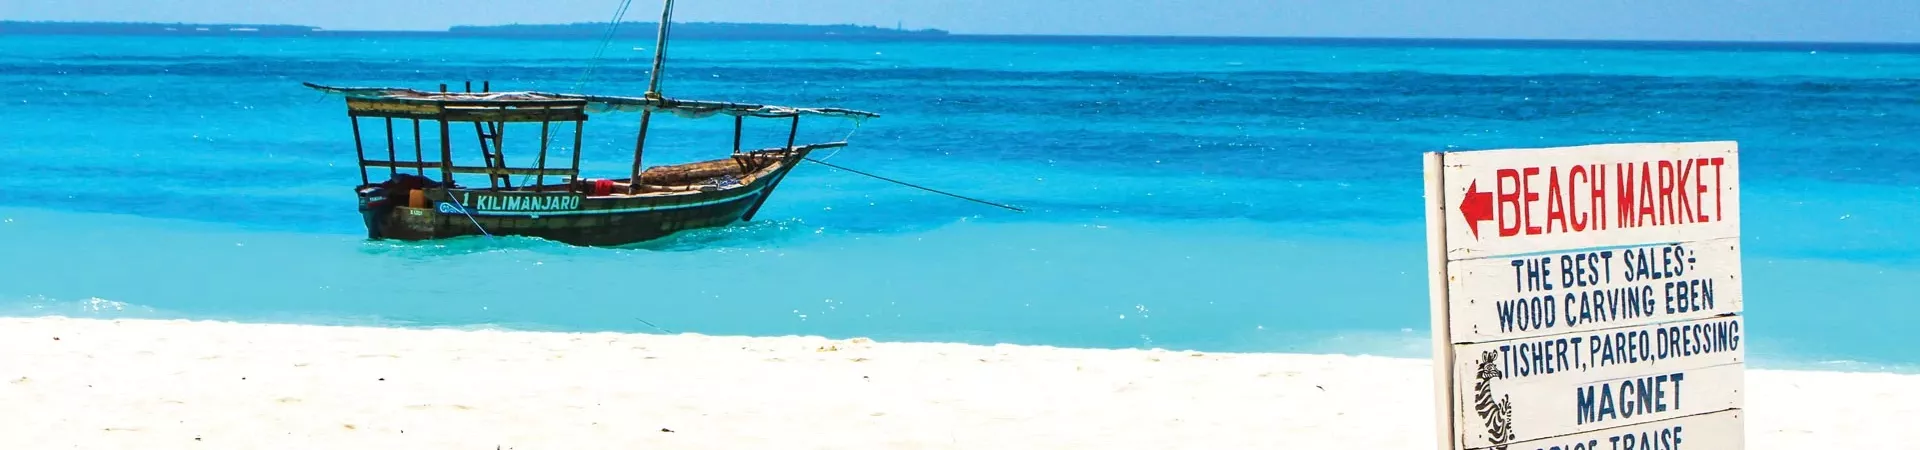 Zanzibar Trips and Travel Guide